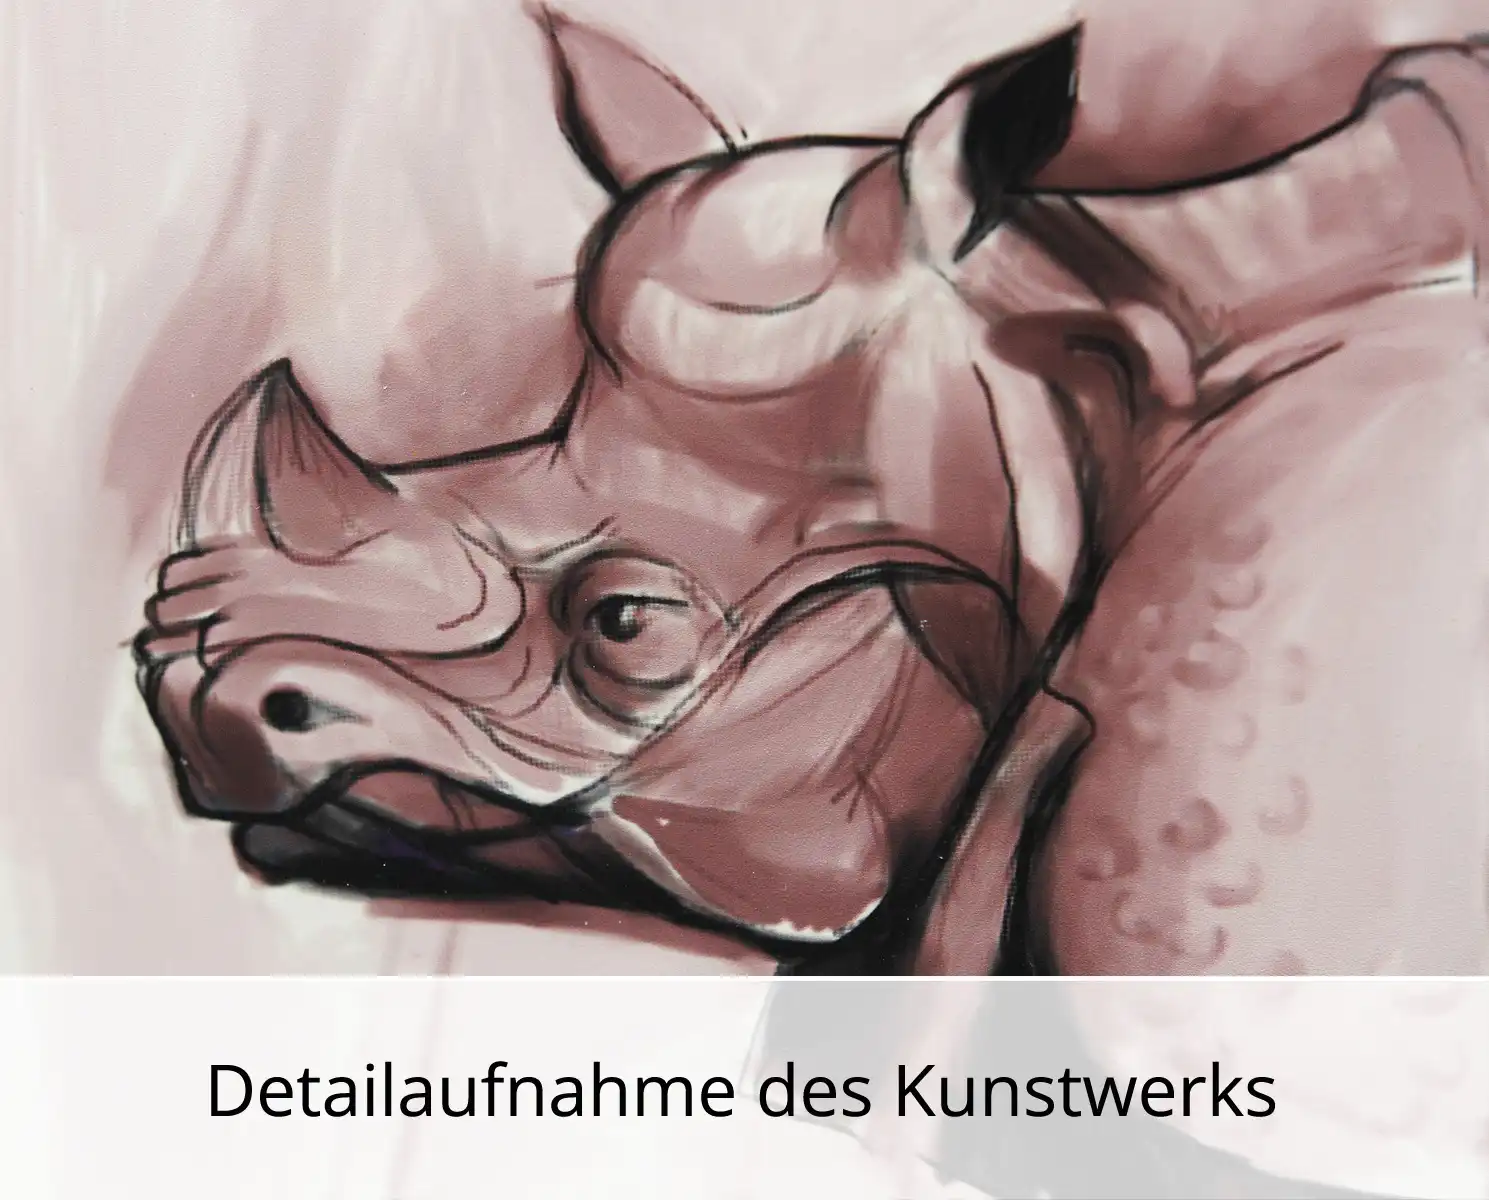 S. Petrunov: "Rhino with a nude", limitierter Fineartprint auf Papier